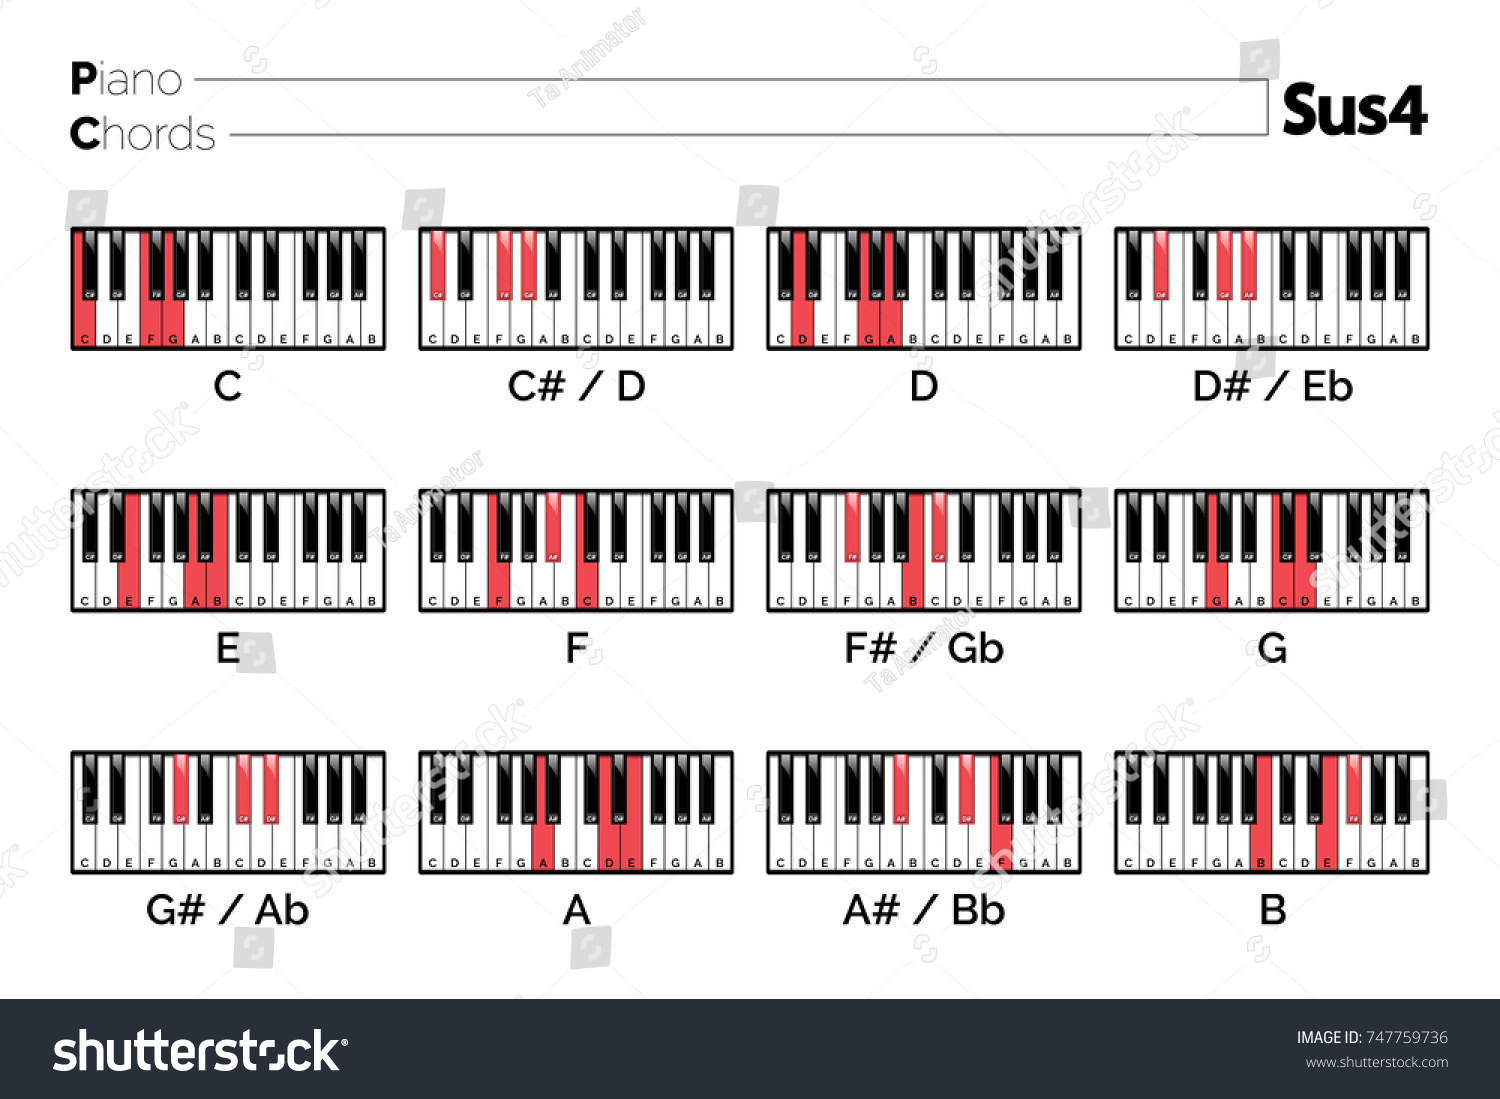 D# на фортепиано